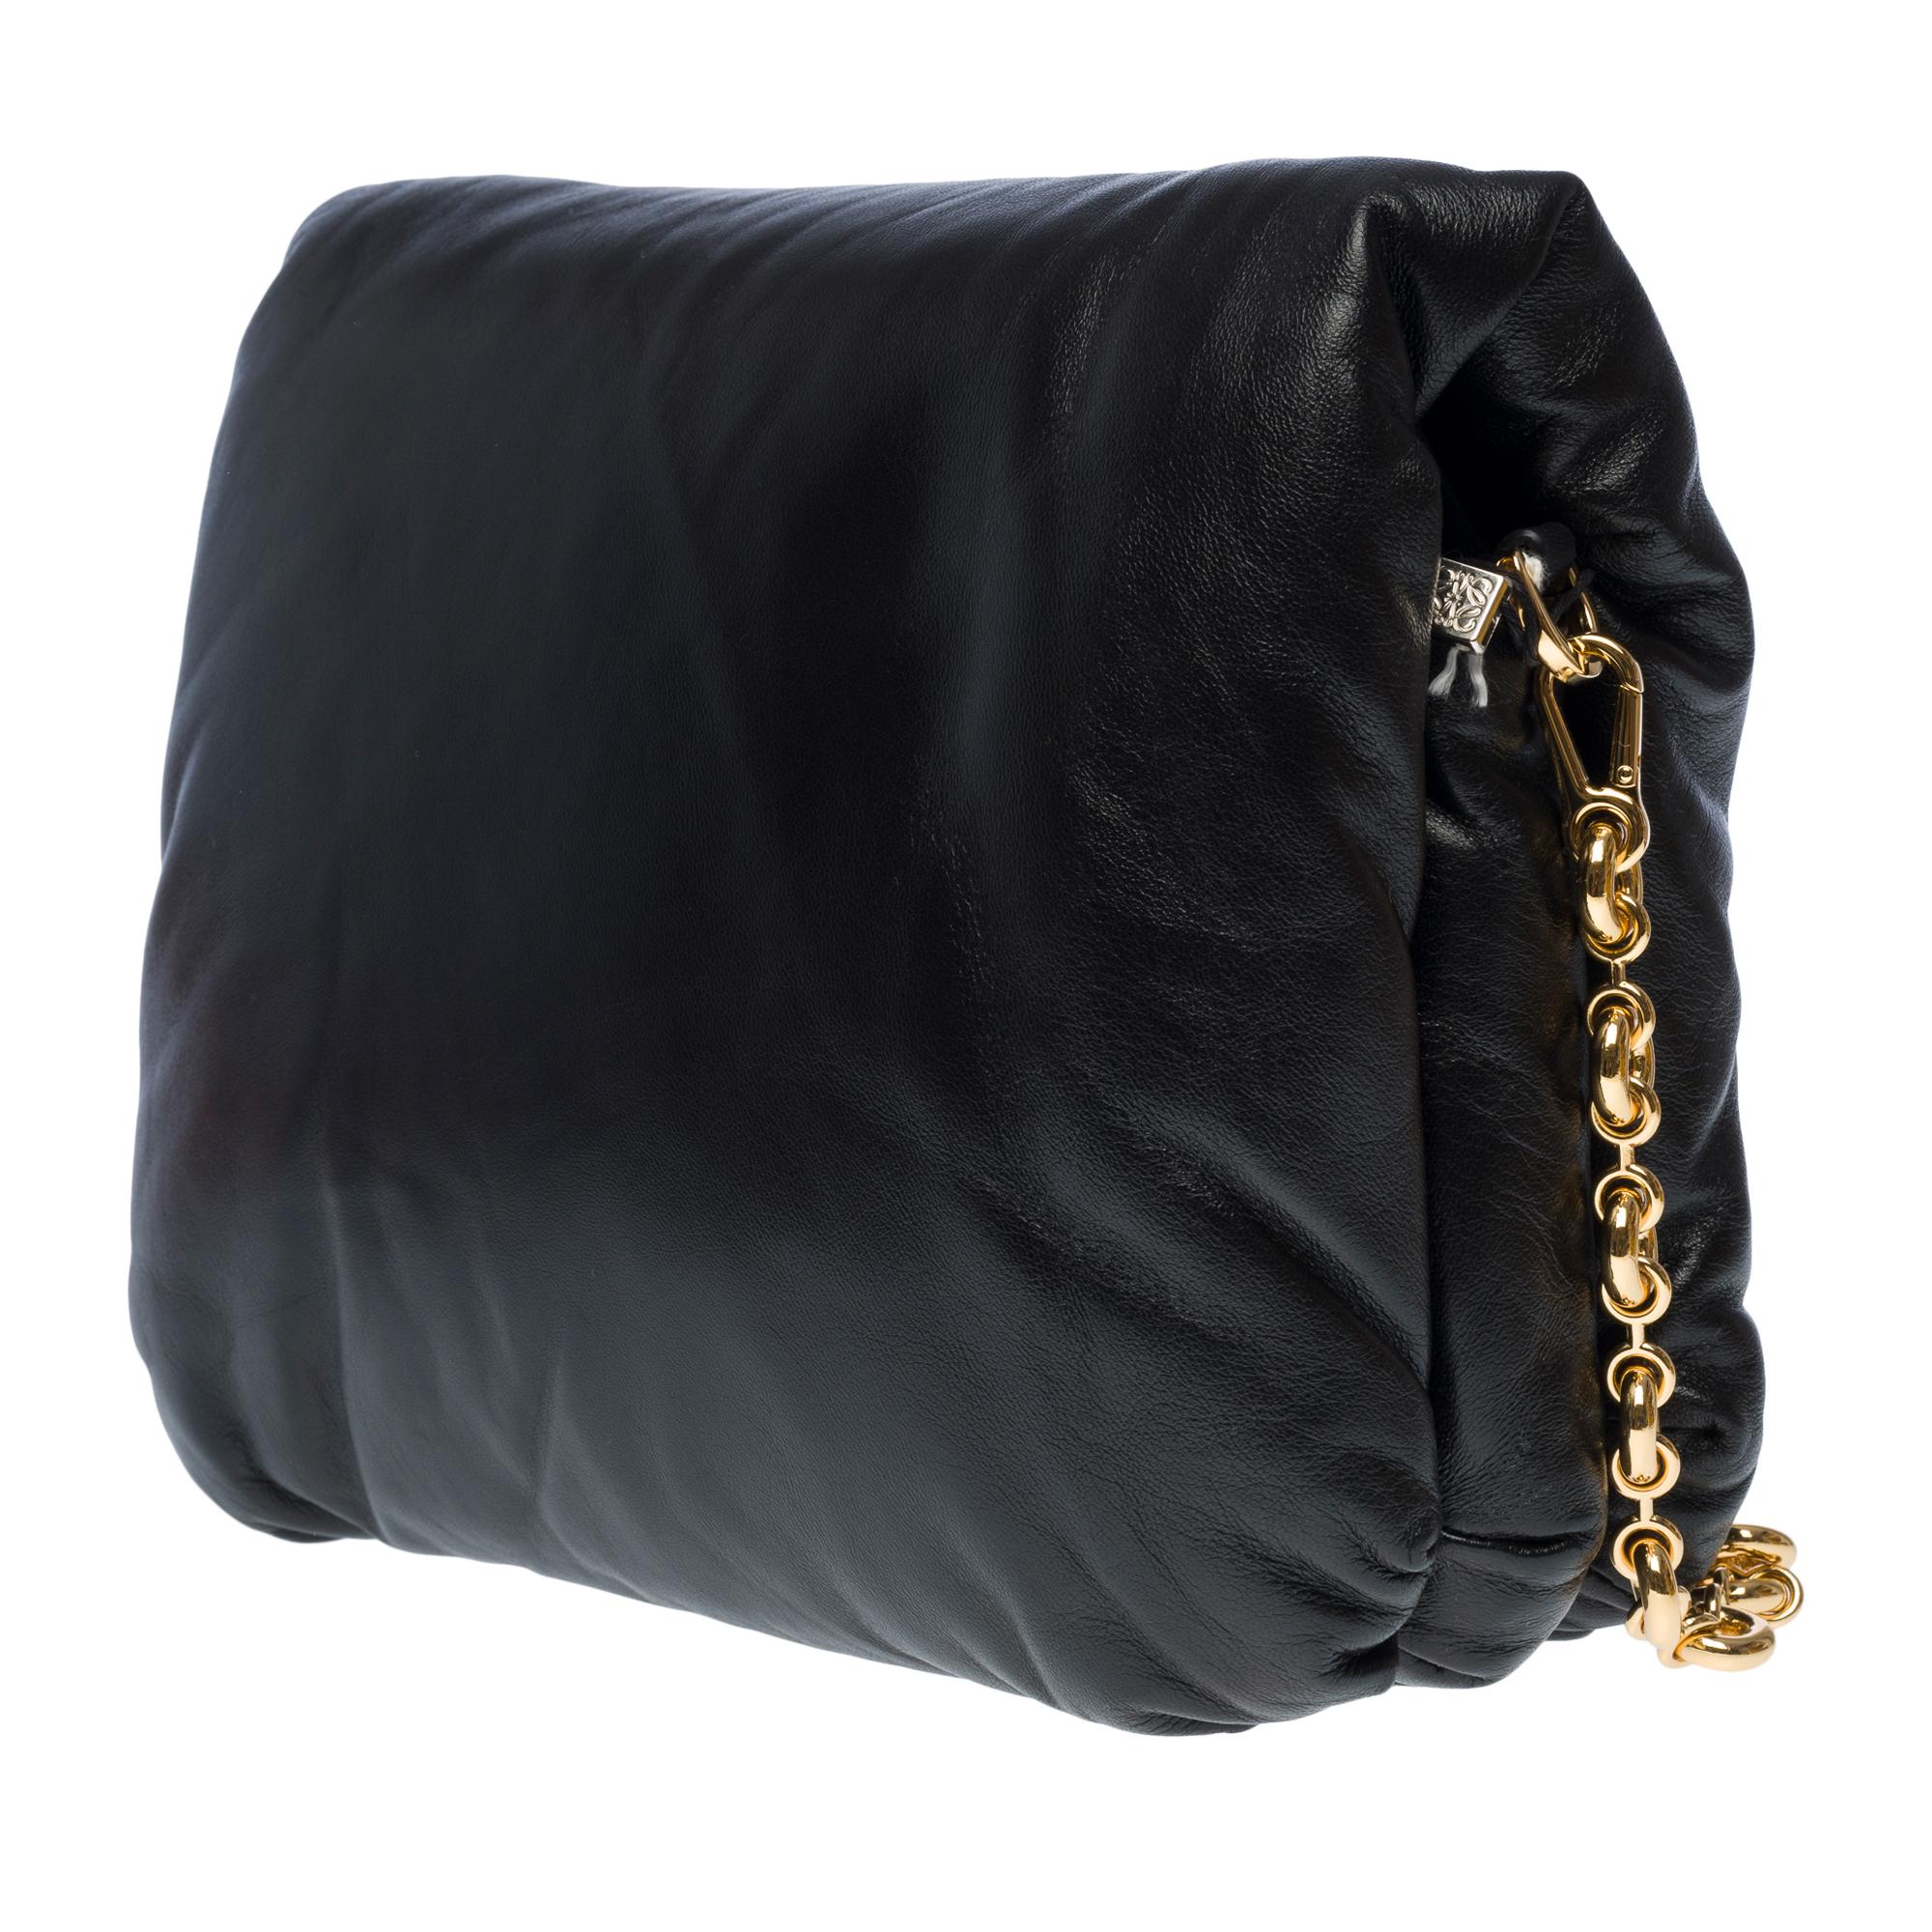 Women's or Men's New Loewe Goya Puffer shoulder bag in black shiny lambskin leather, GHW